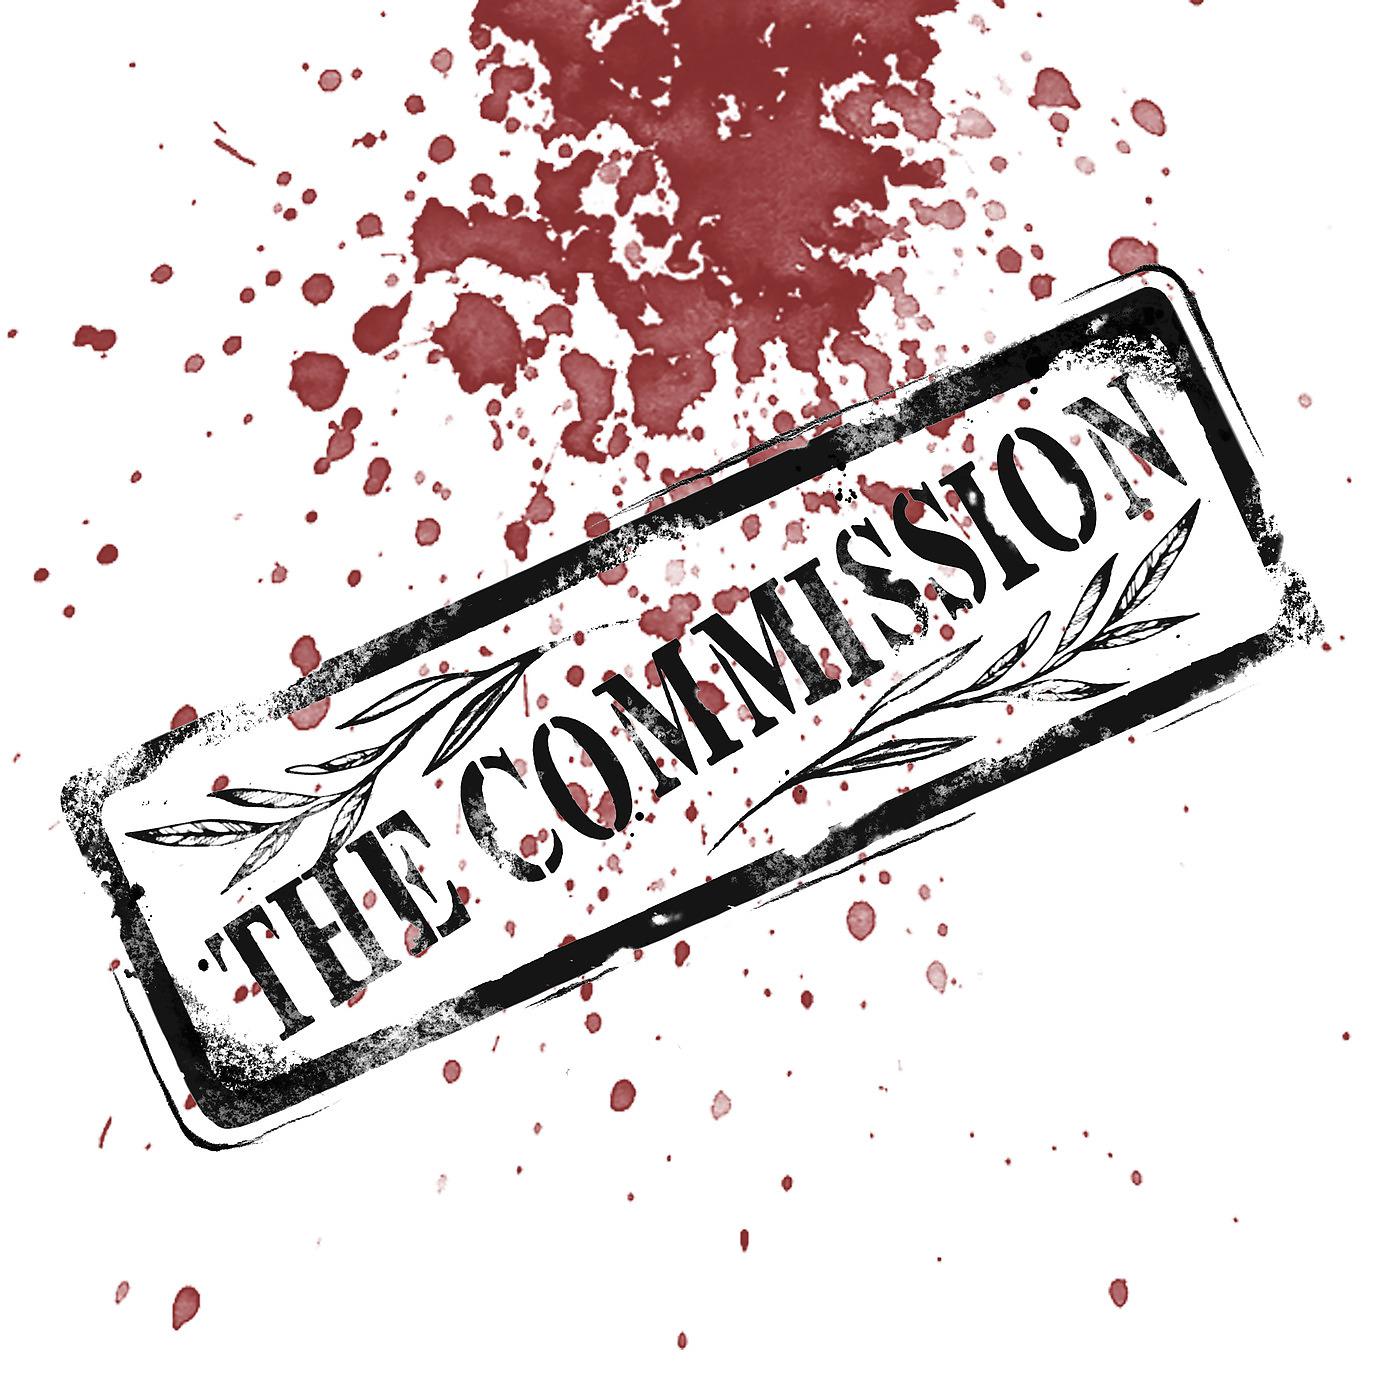 Постер альбома The Commission